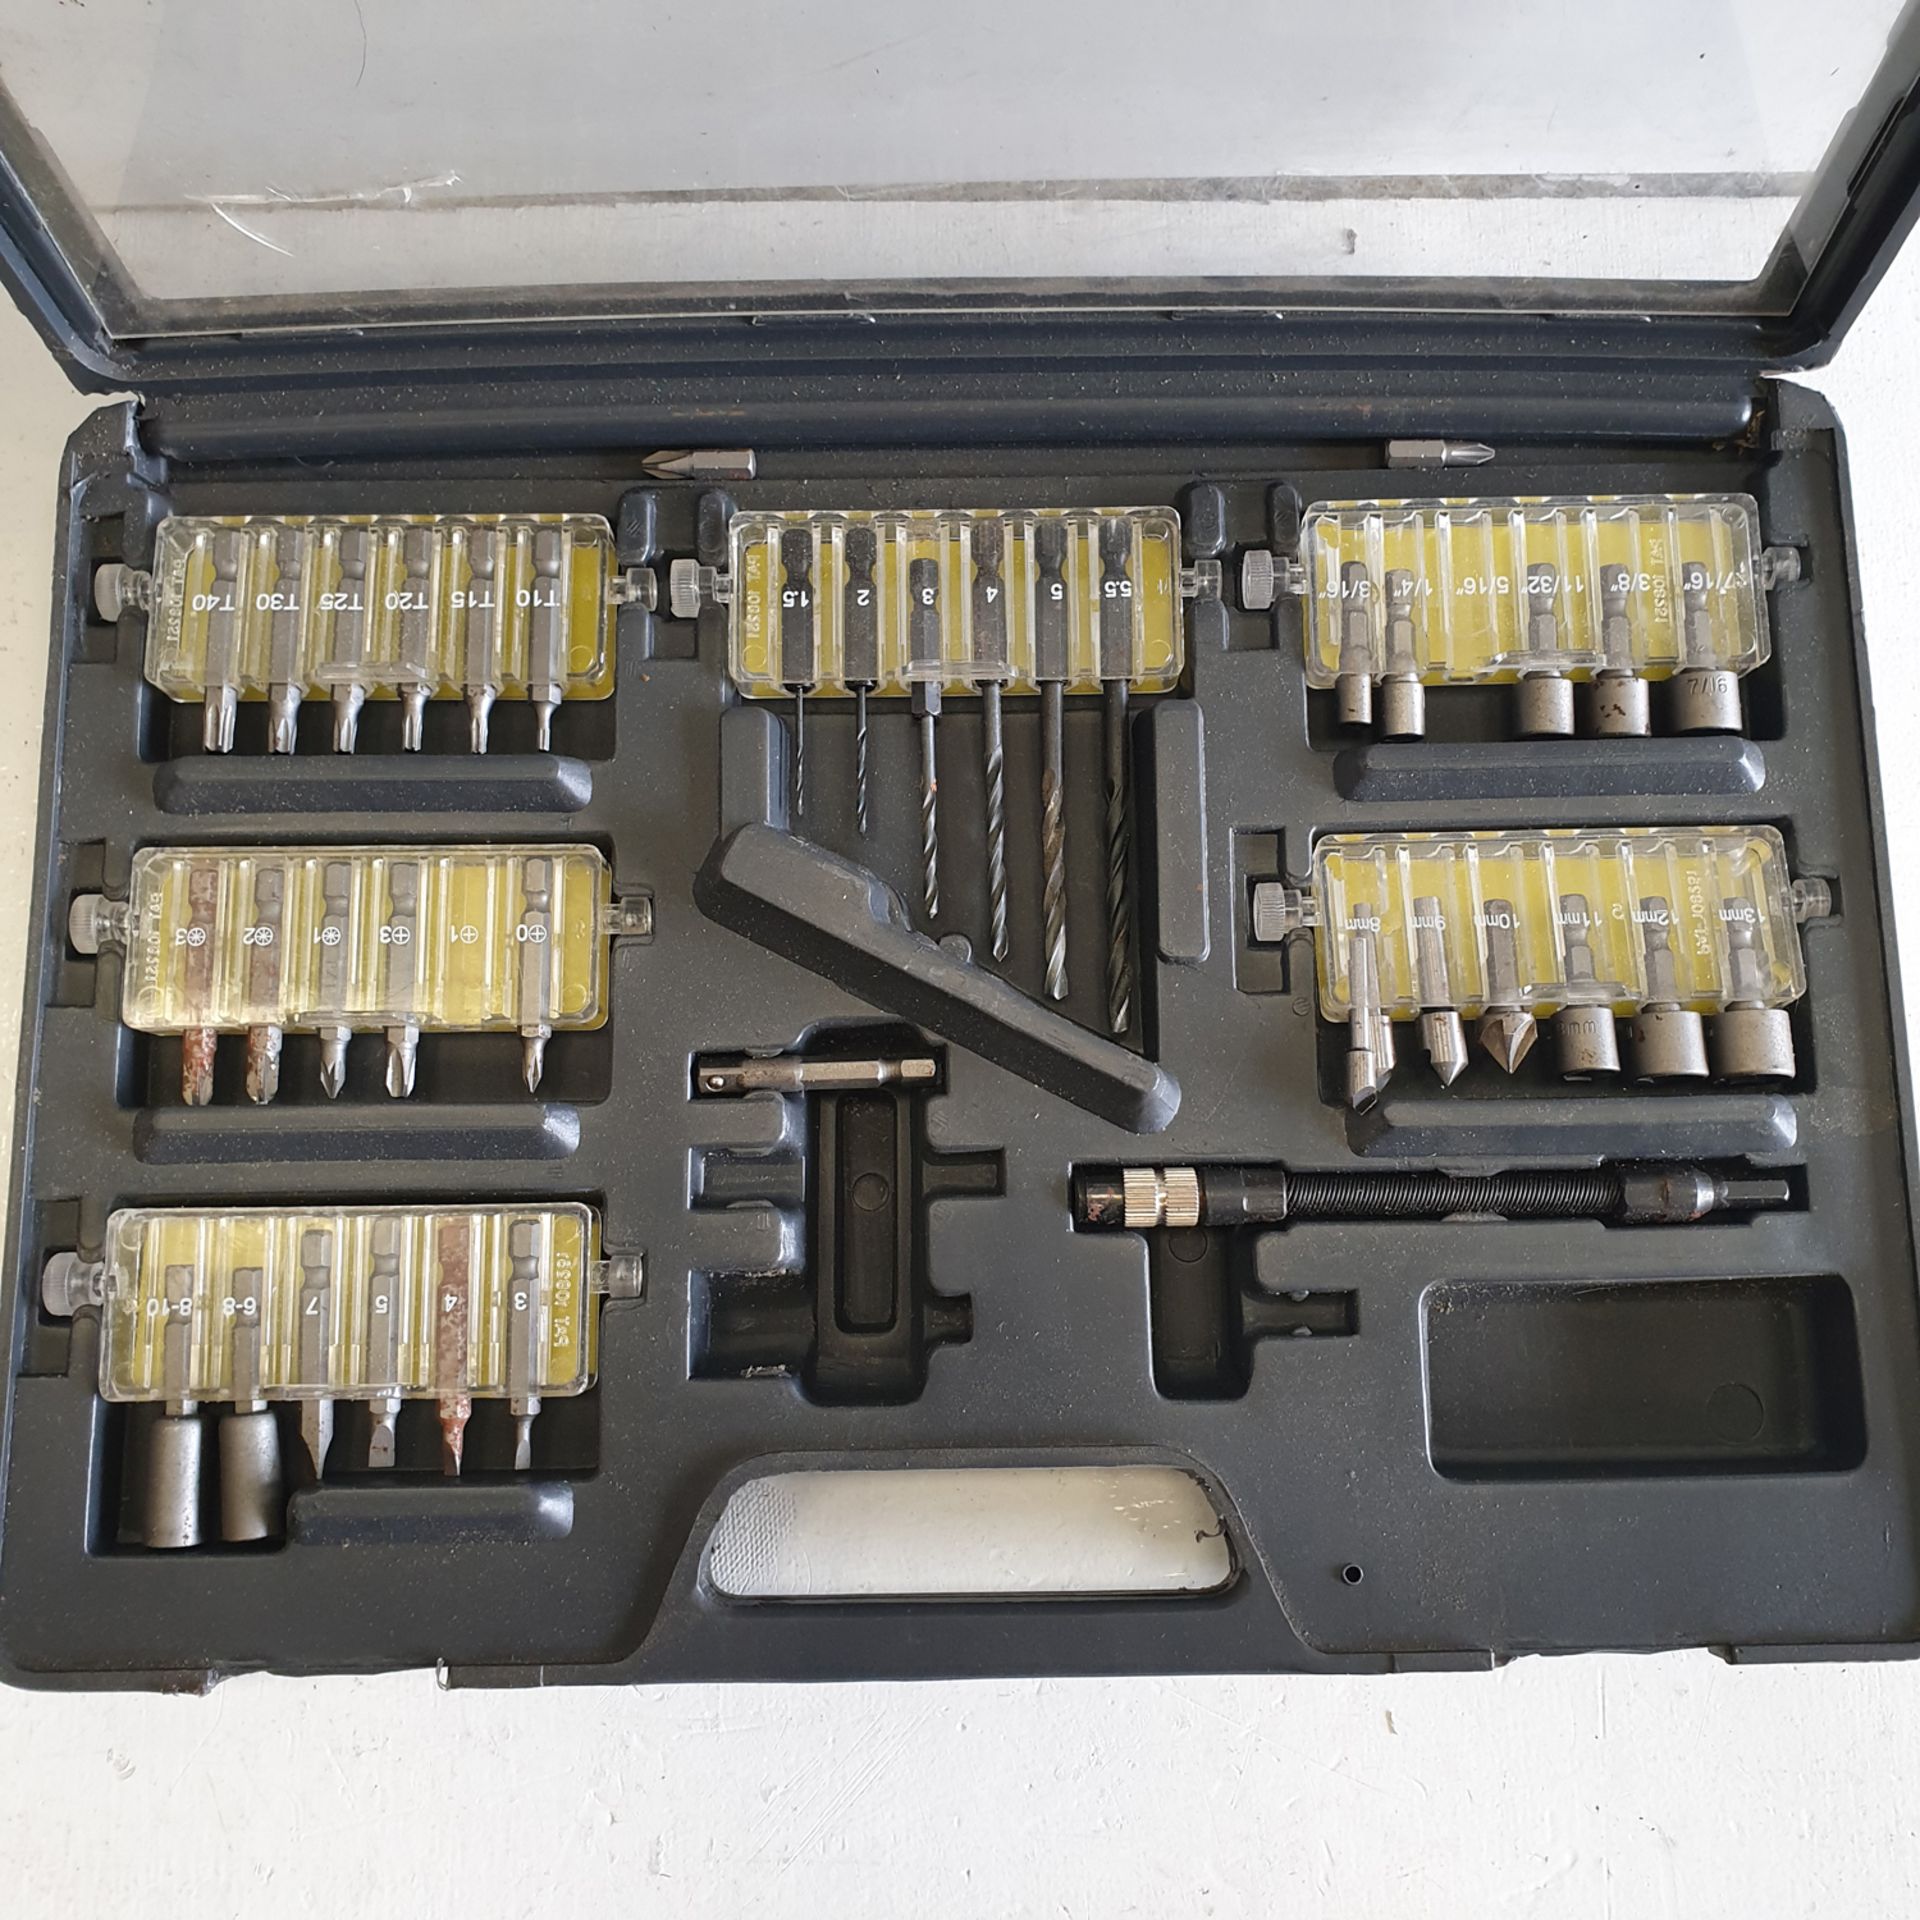 Box of Various Drill Bits. - Image 3 of 3